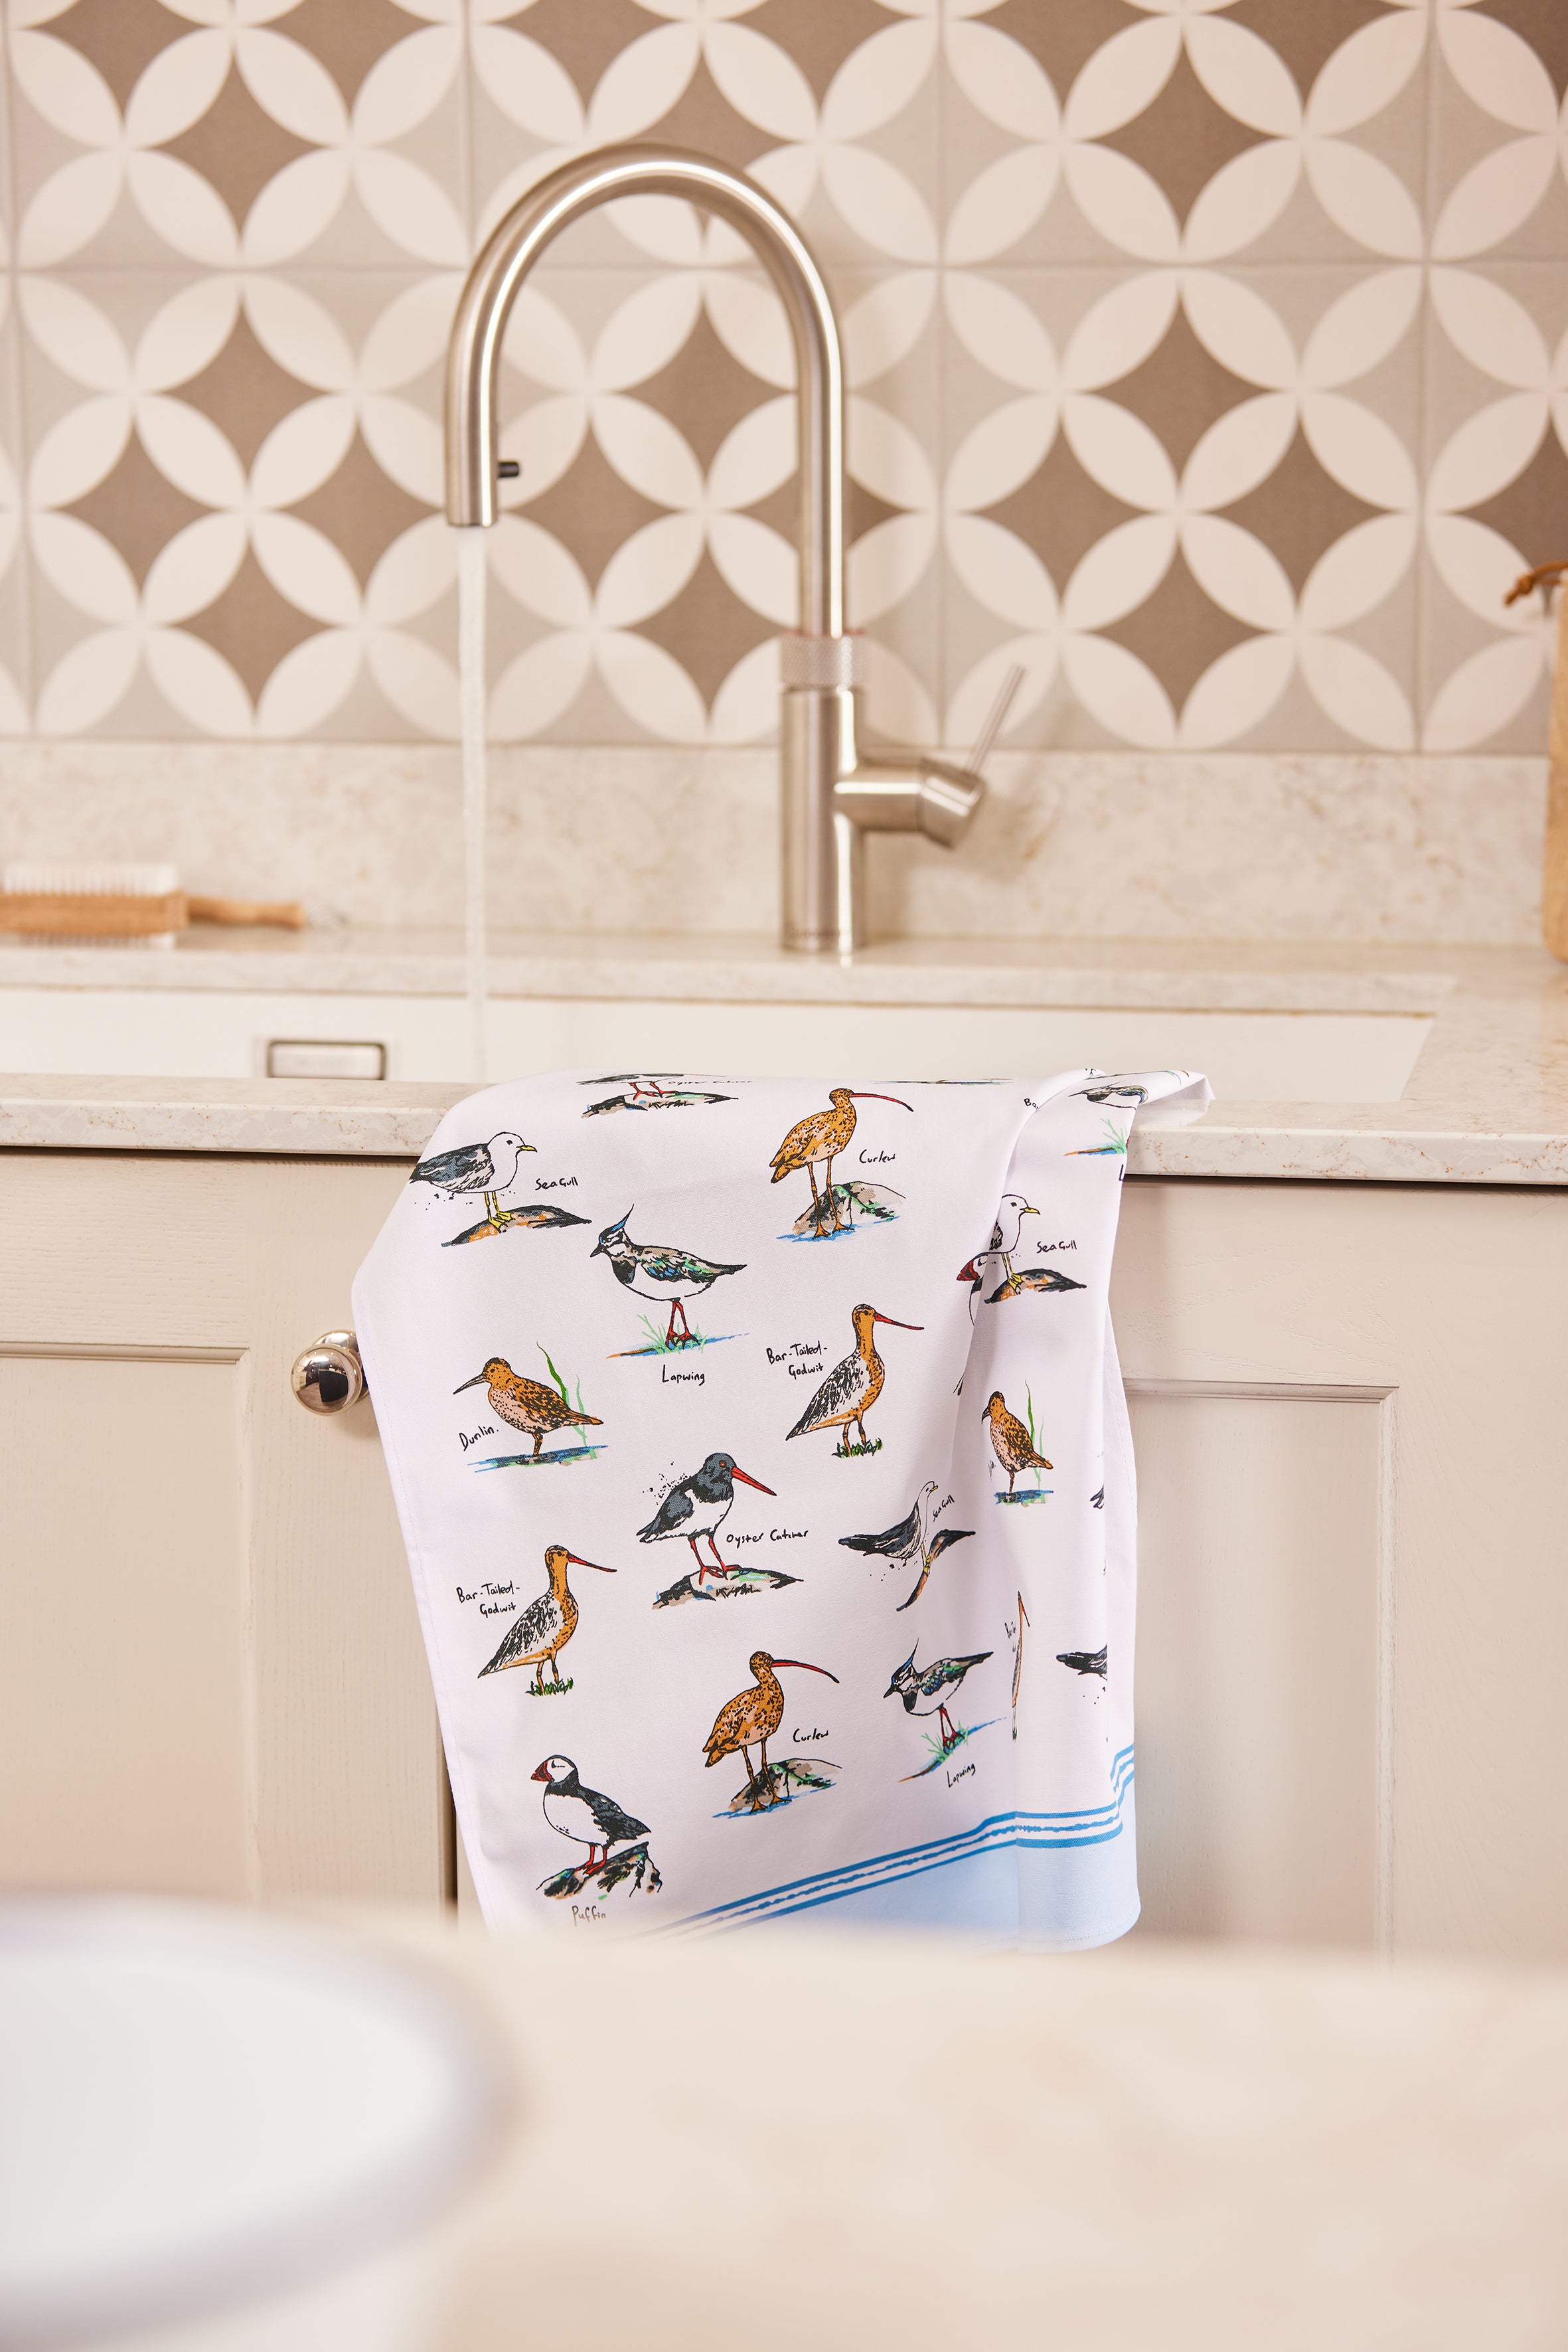 Ulster Weavers, "Coastal Birds", Printed cotton tea towel.